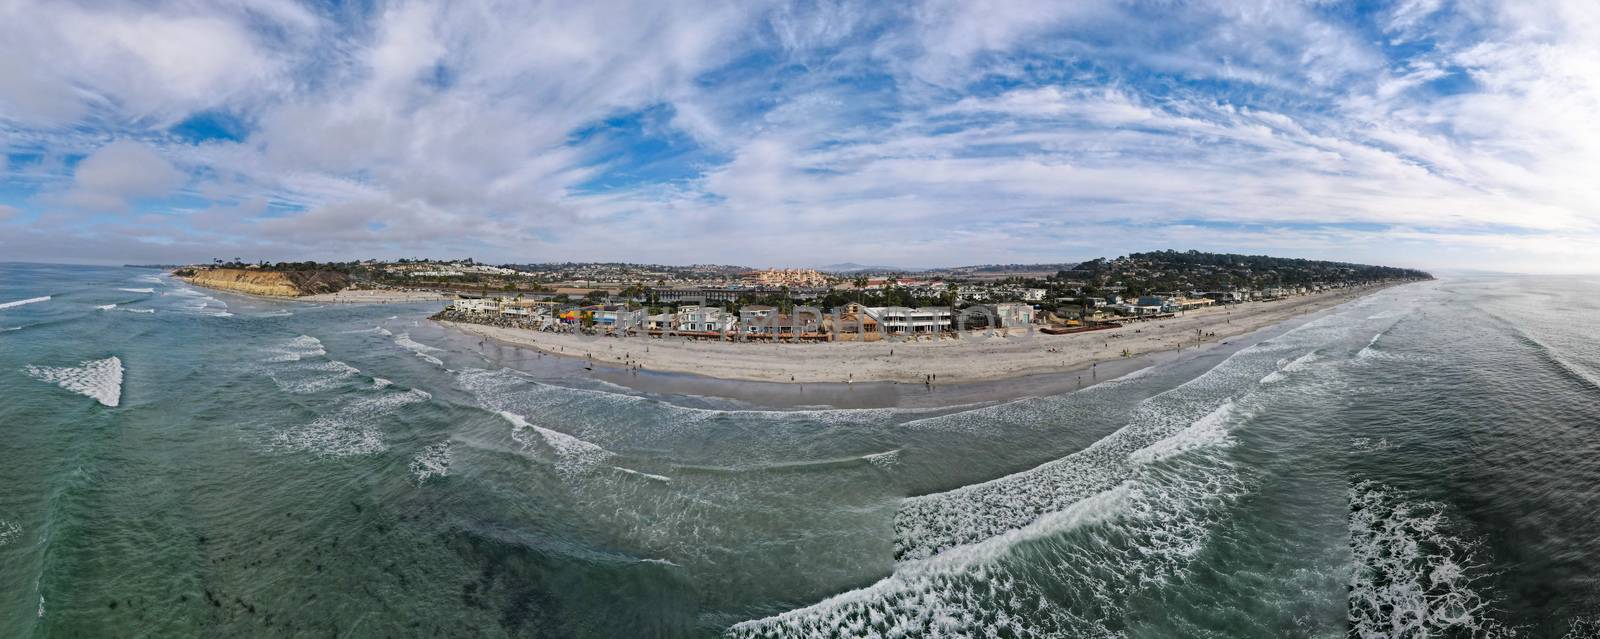 Aerial view of Del Mar coastline and beach, San Diego County, California, USA. by Bonandbon